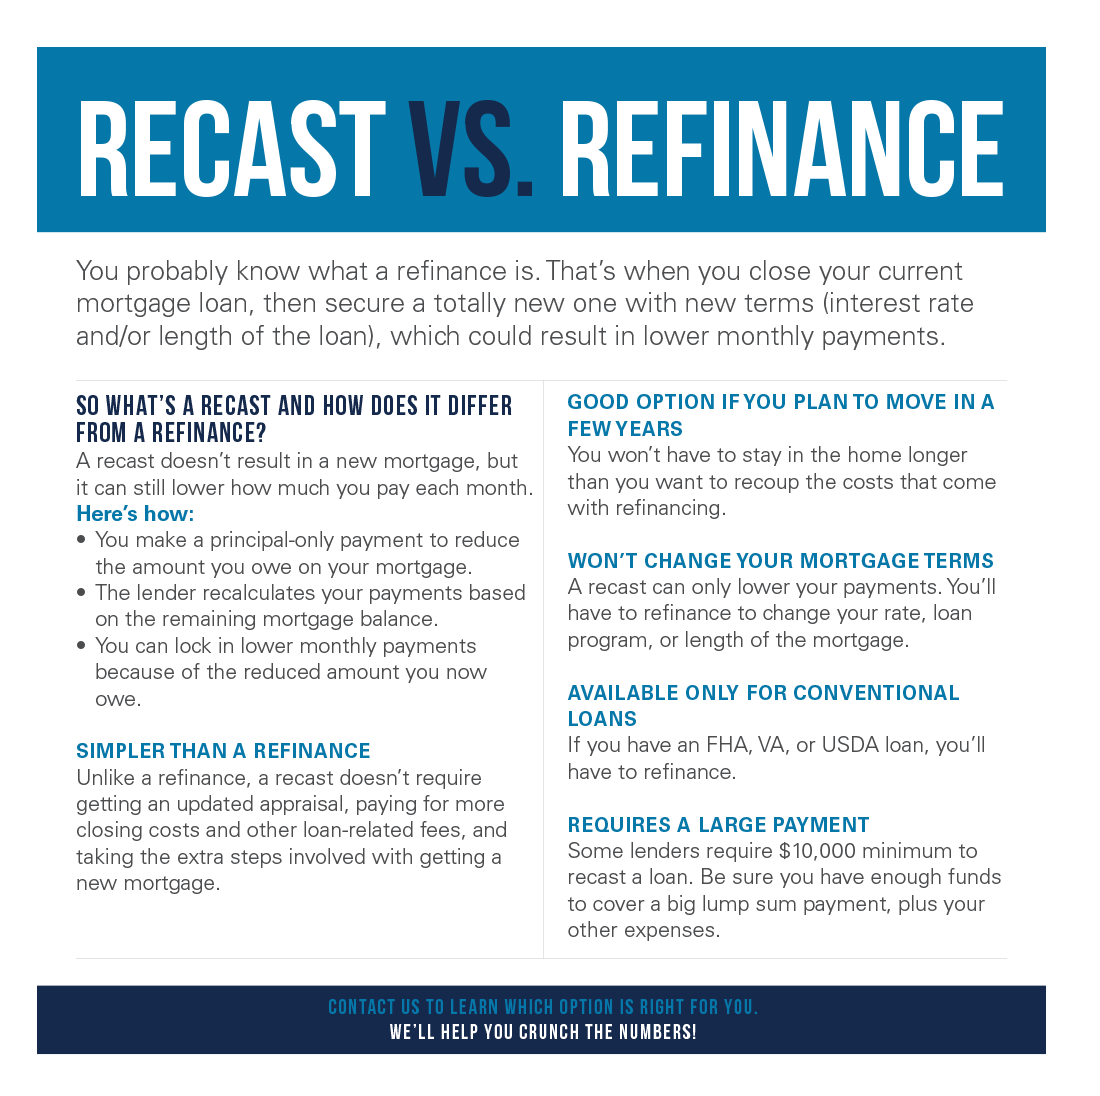 Recast vs. Refinance